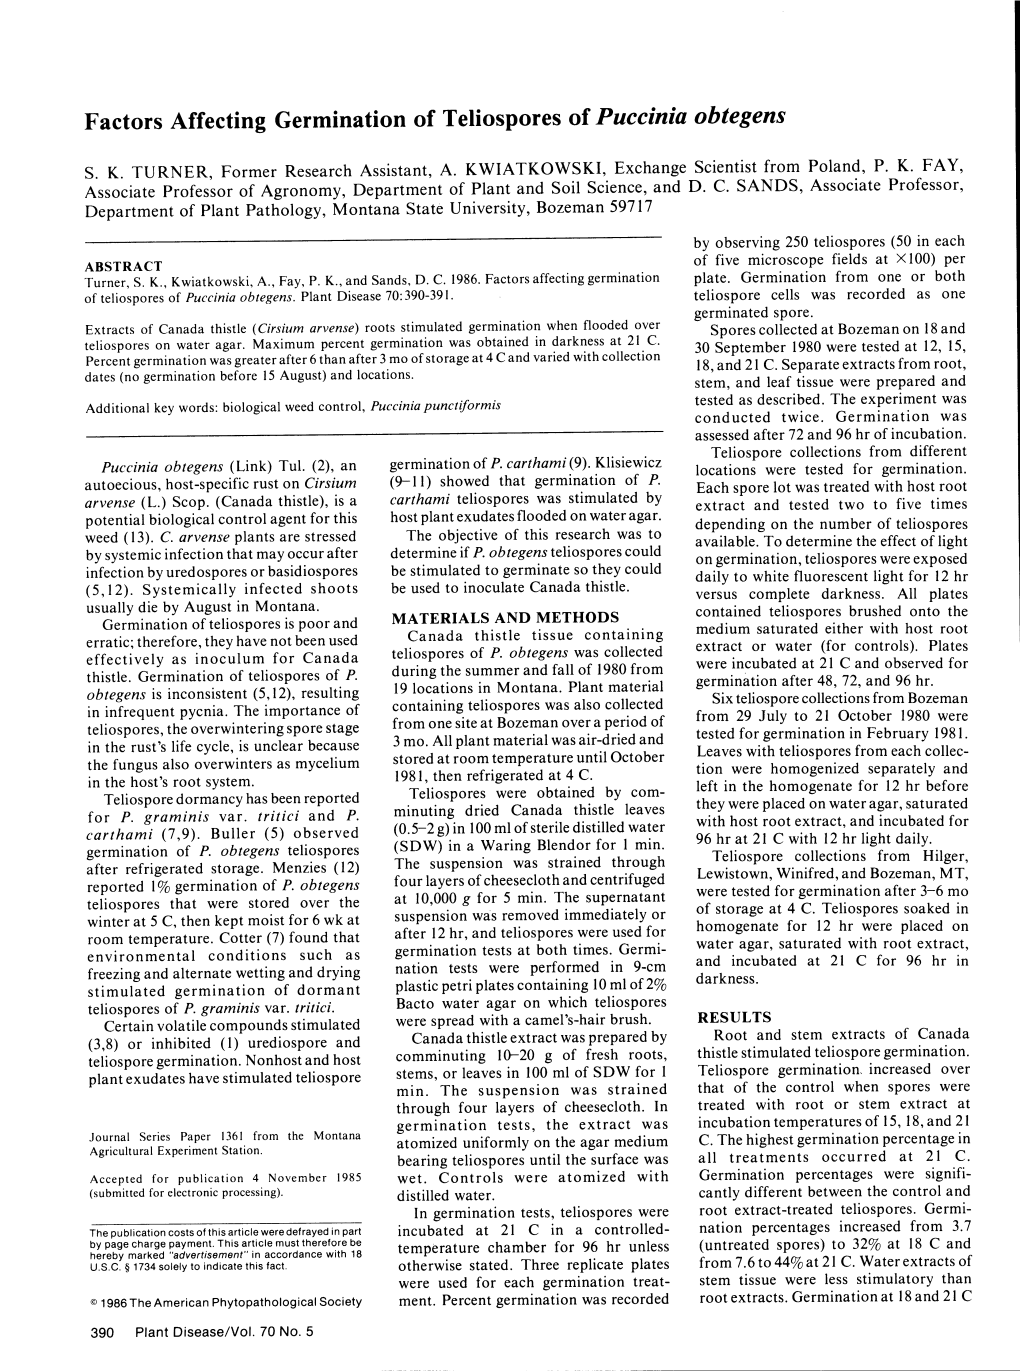 Factors Affecting Germination of Teliospores of Puccinia Obtegens